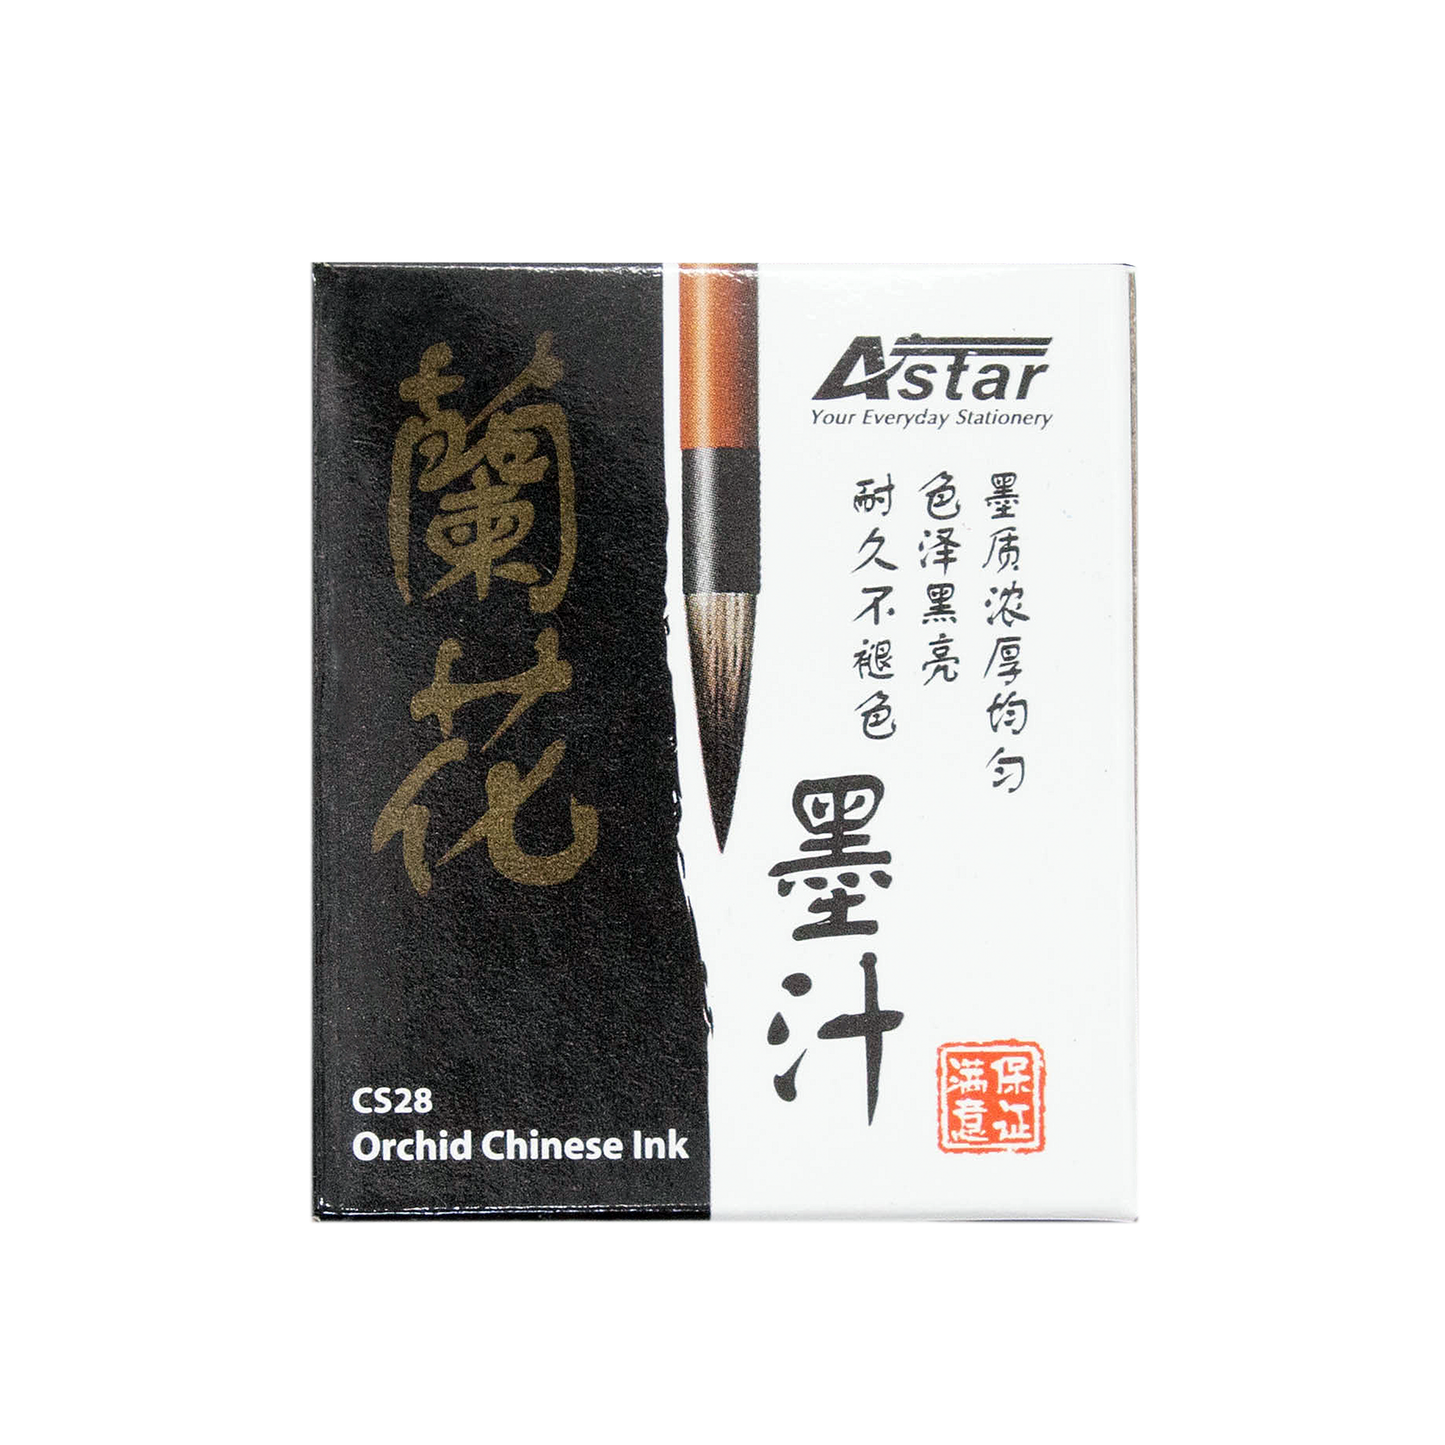 CS28 - ASTAR CHINESE INK